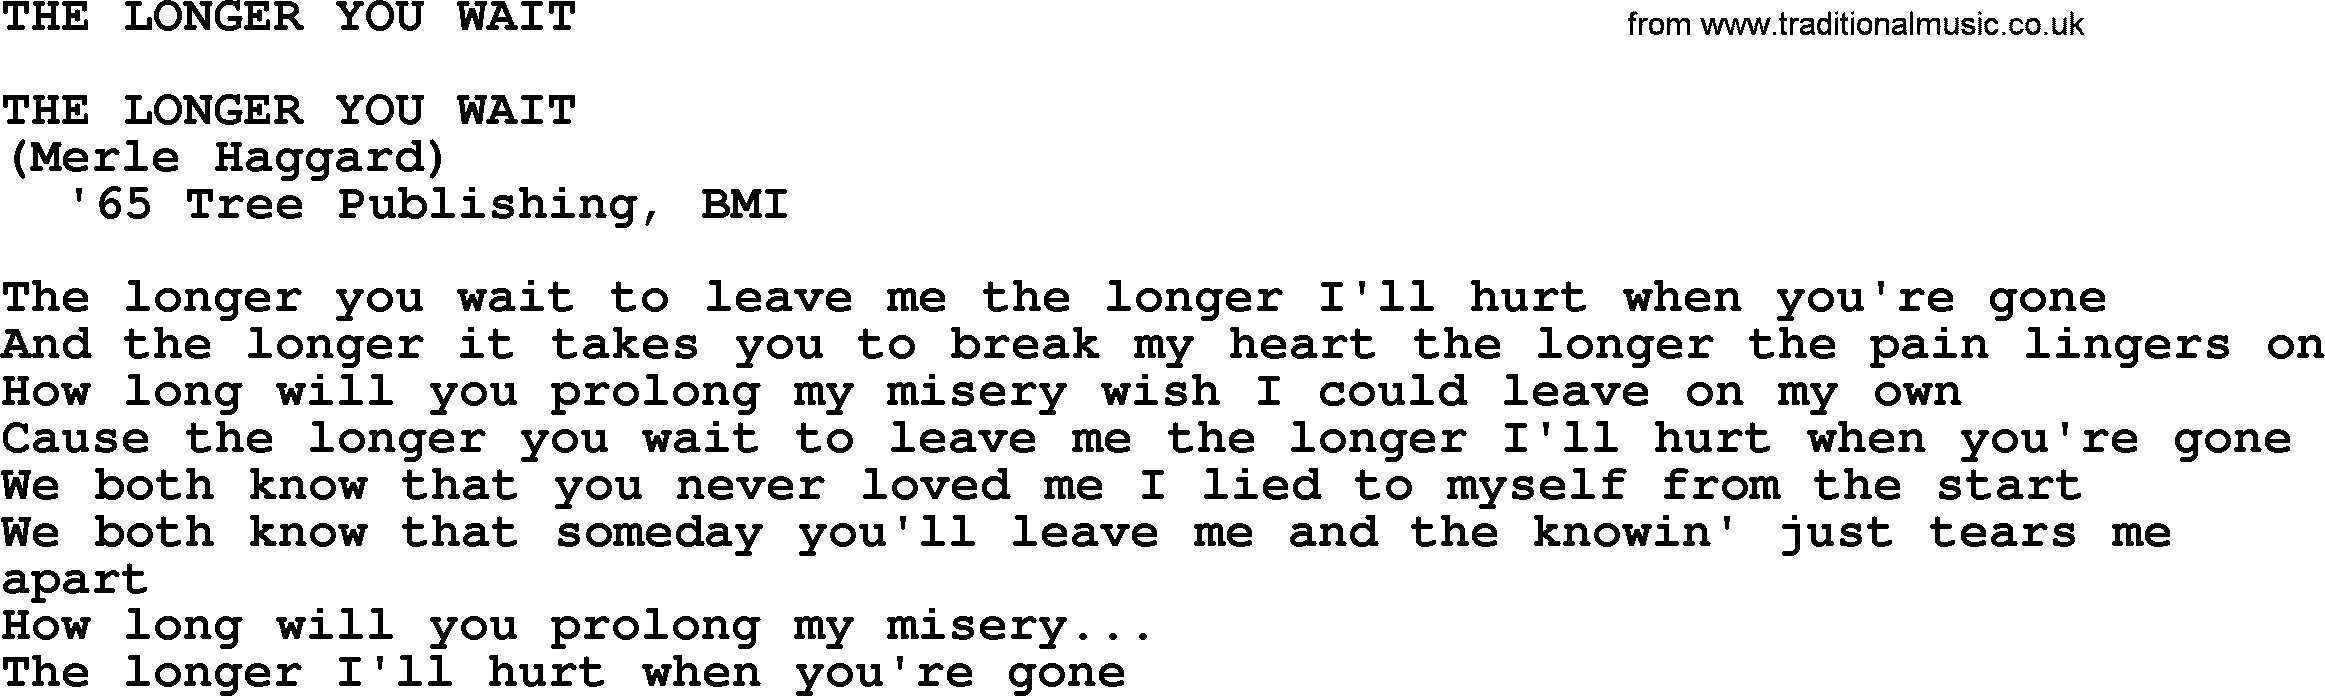 Merle Haggard song: The Longer You Wait, lyrics.